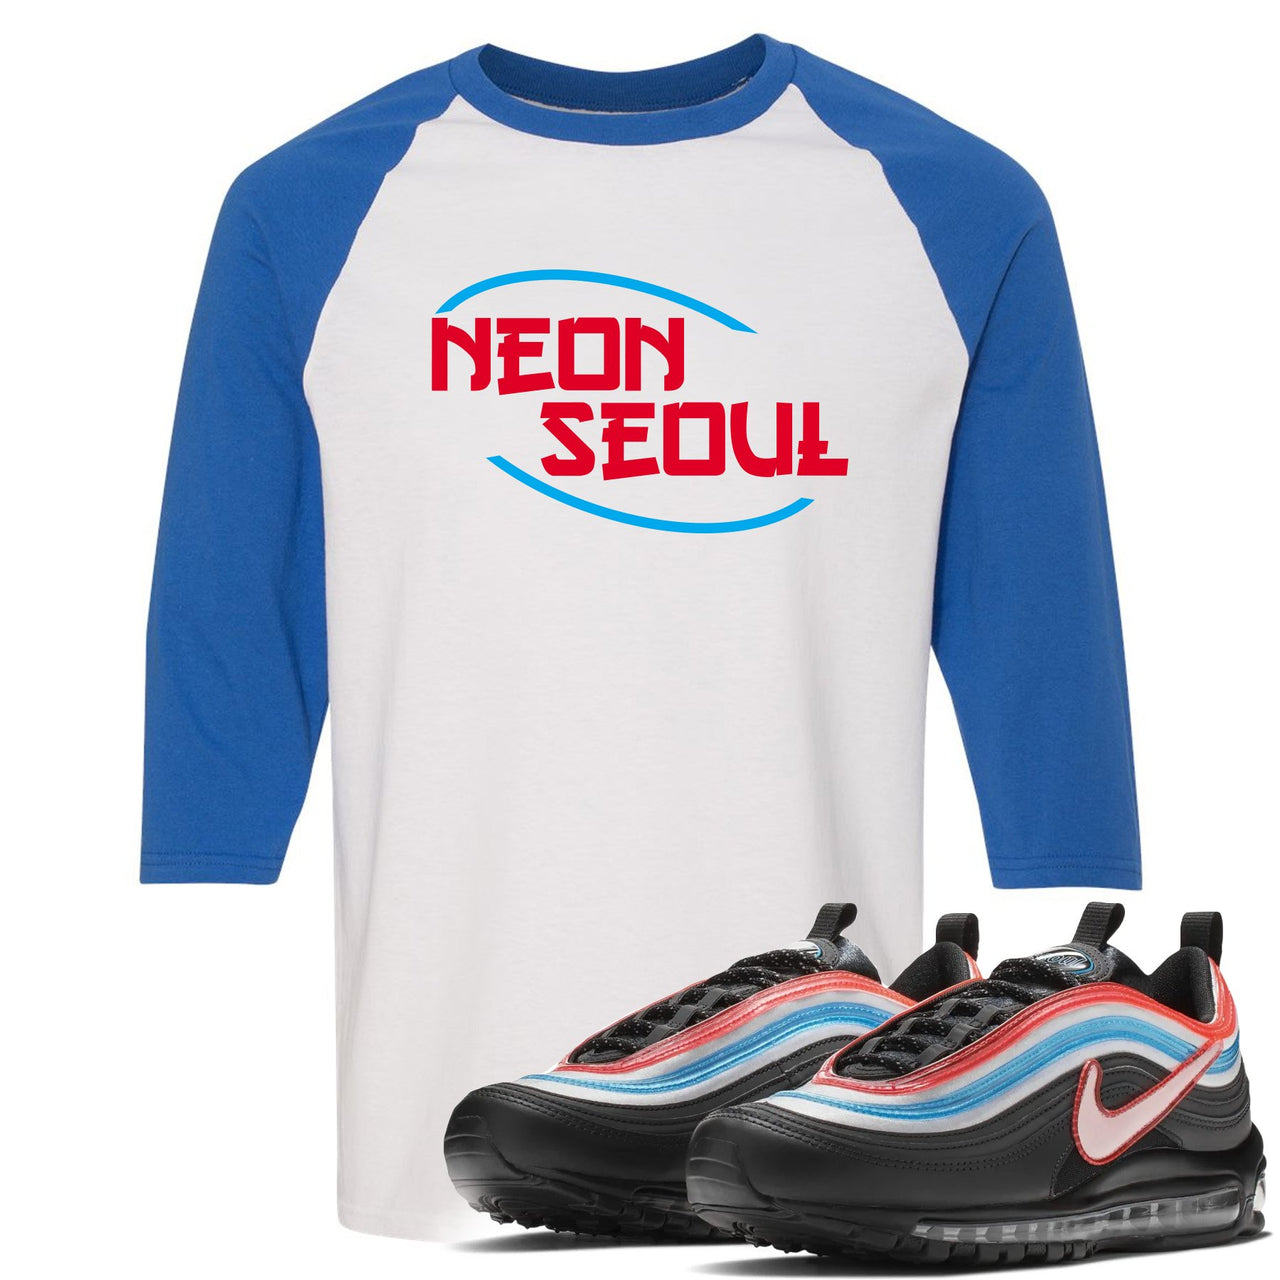 Neon Seoul 97s Raglan T Shirt | Seoul in English, White and Blue